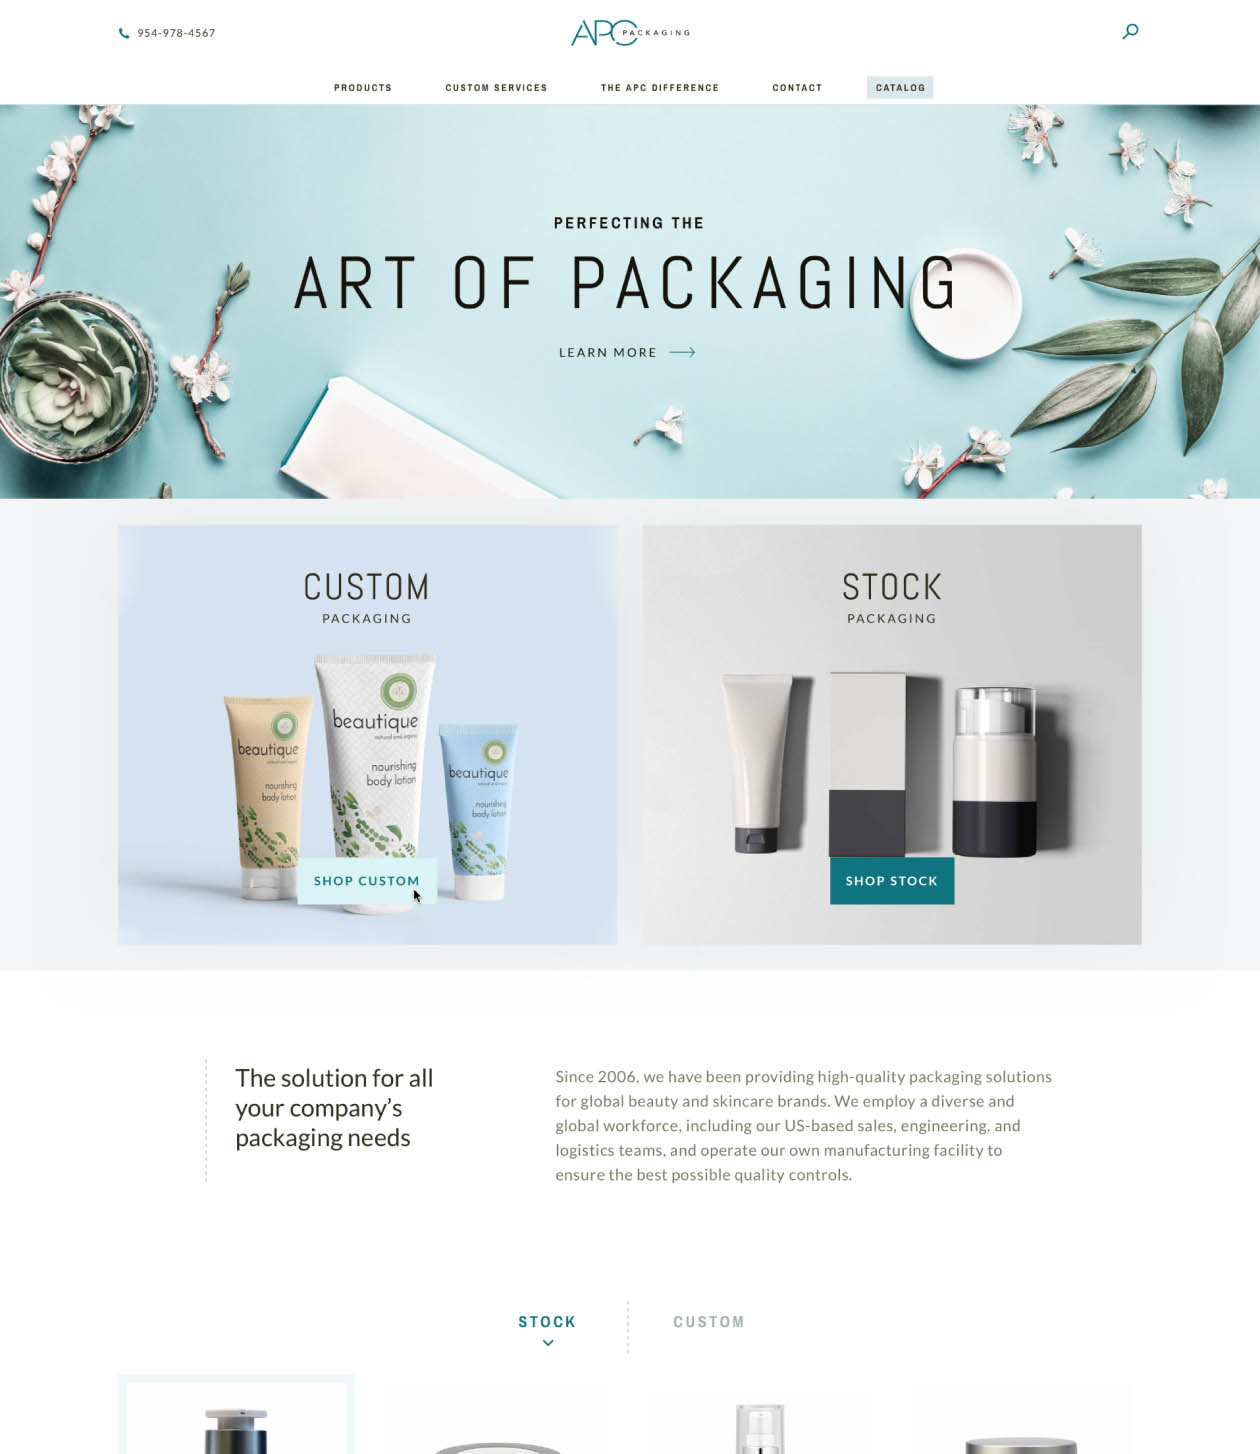 apc-packaging-webdesign-casestudy-1